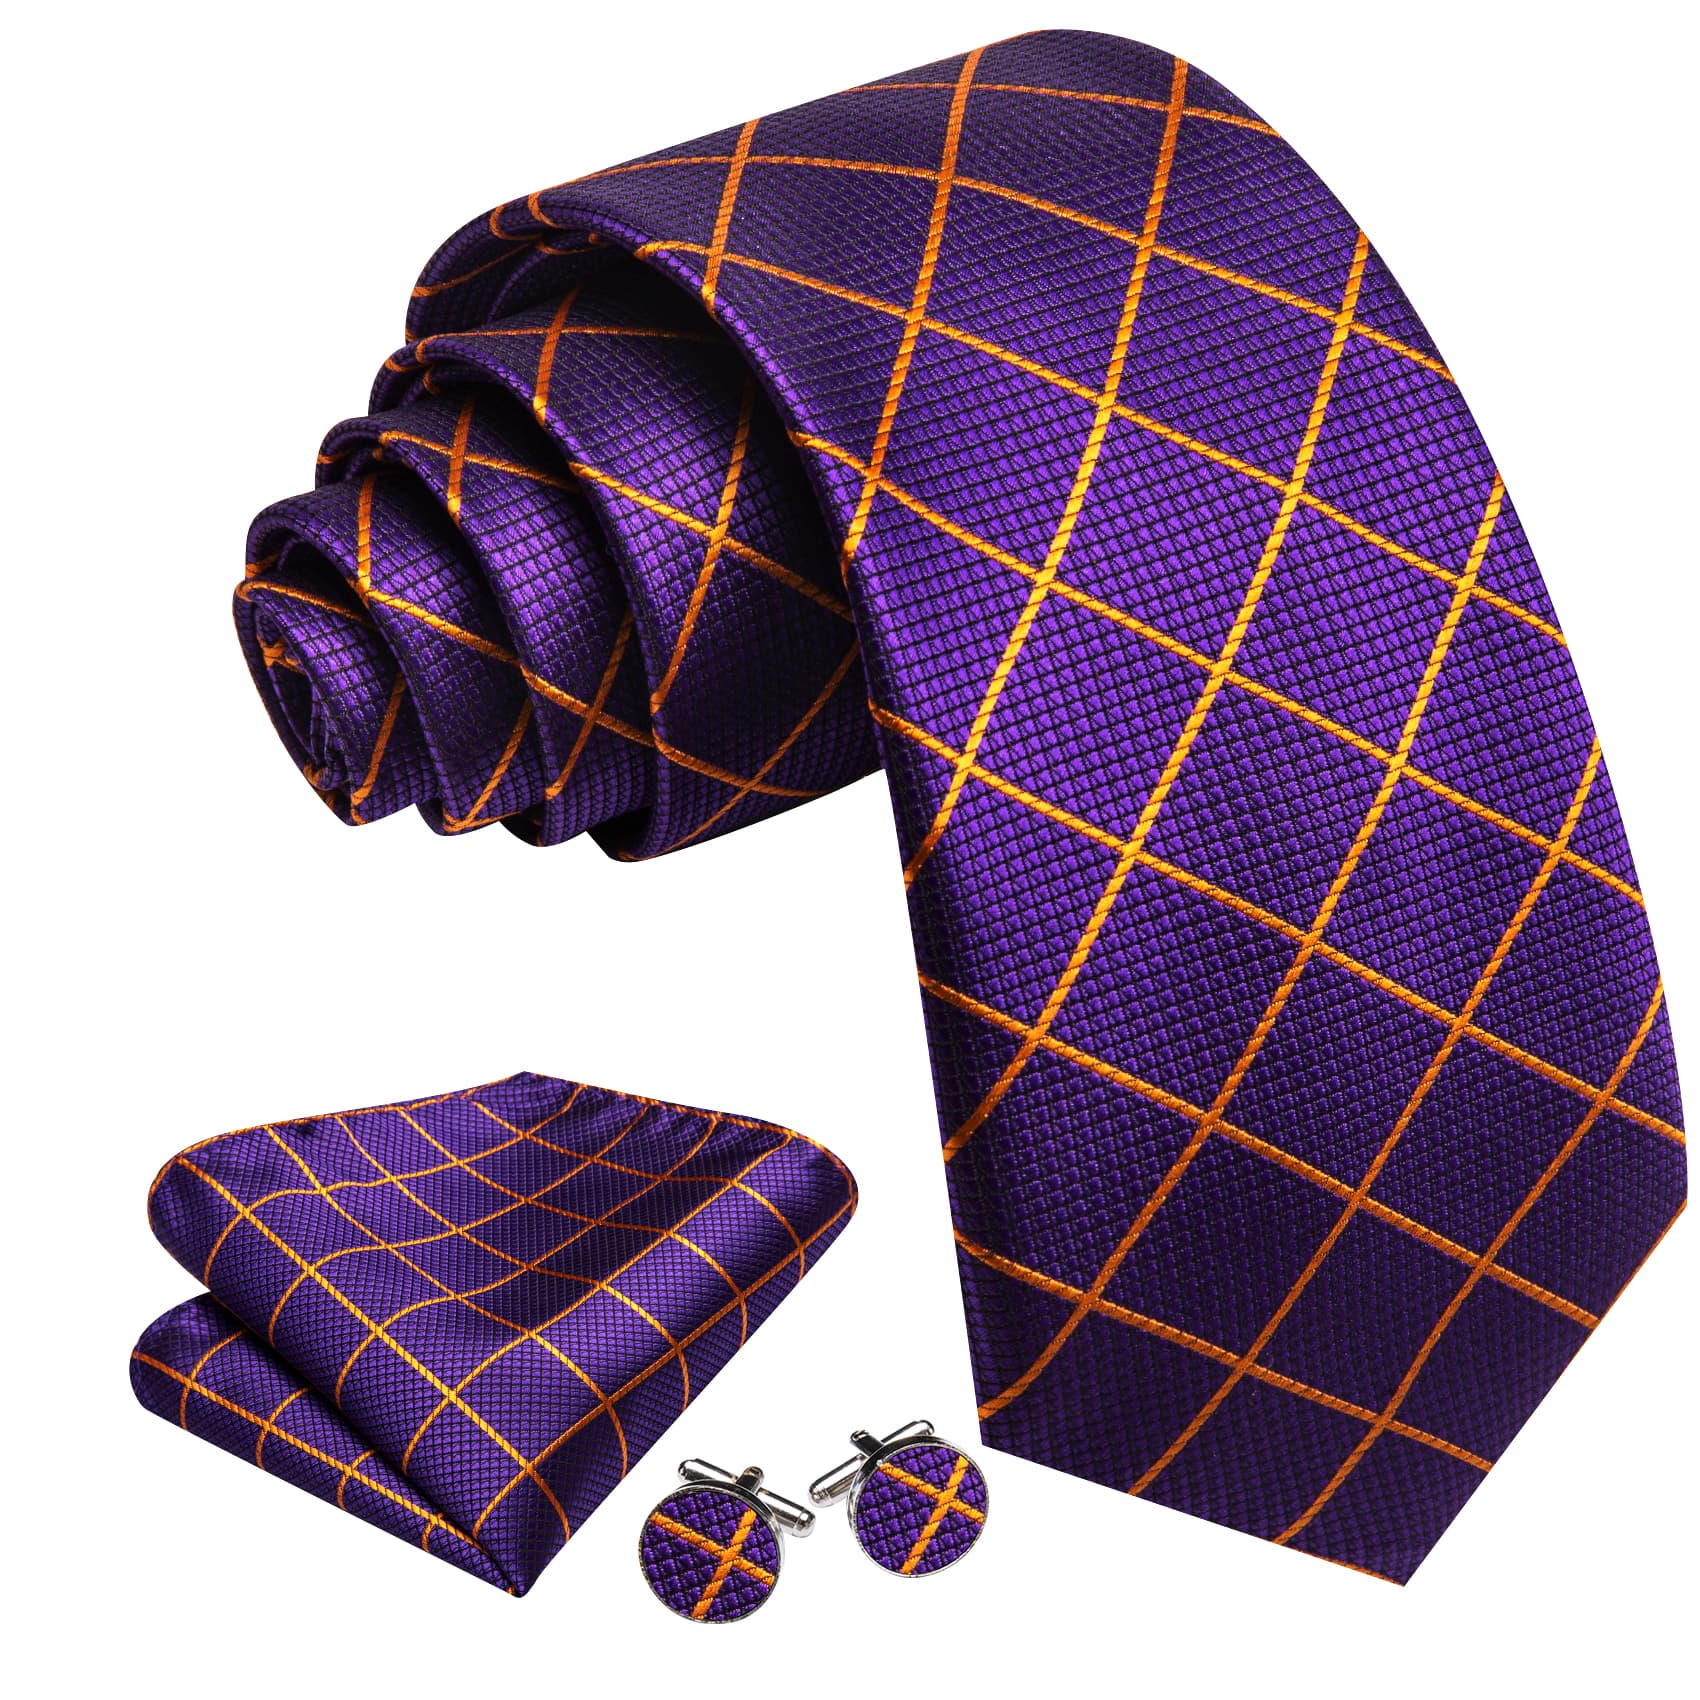  Purple Plaid Tie with Yellow Stripes Men's Business Set